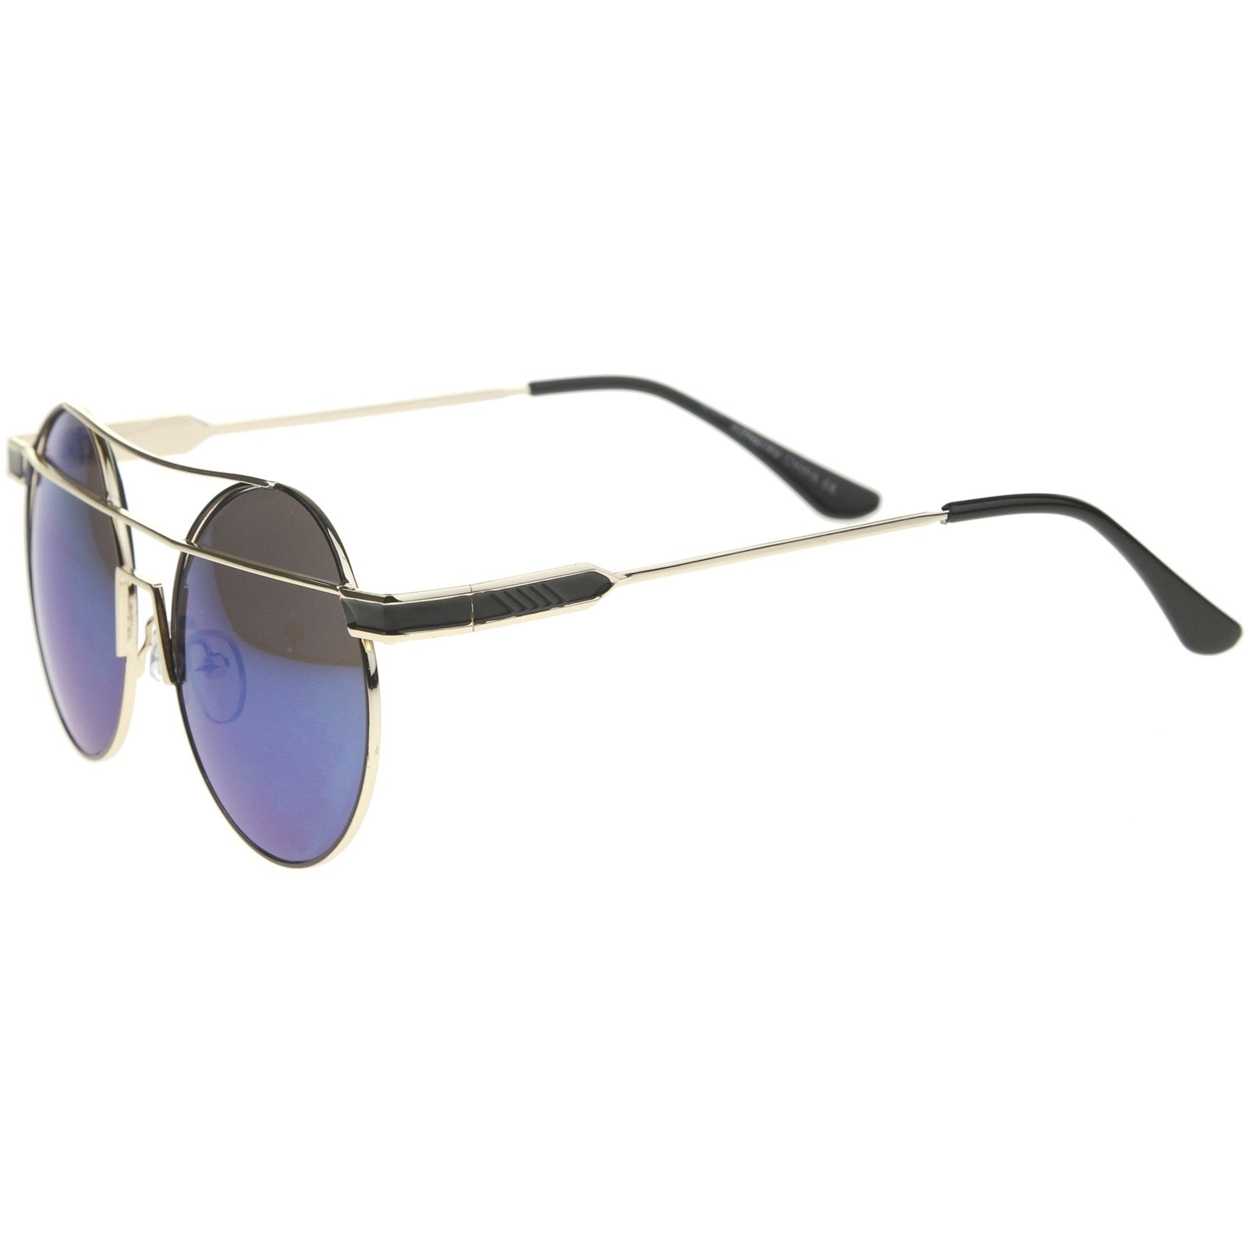 Modern Metal Frame Double Bridge Colored Mirror Lens Round Sunglasses 59mm - Gold-Black / Blue Mirror